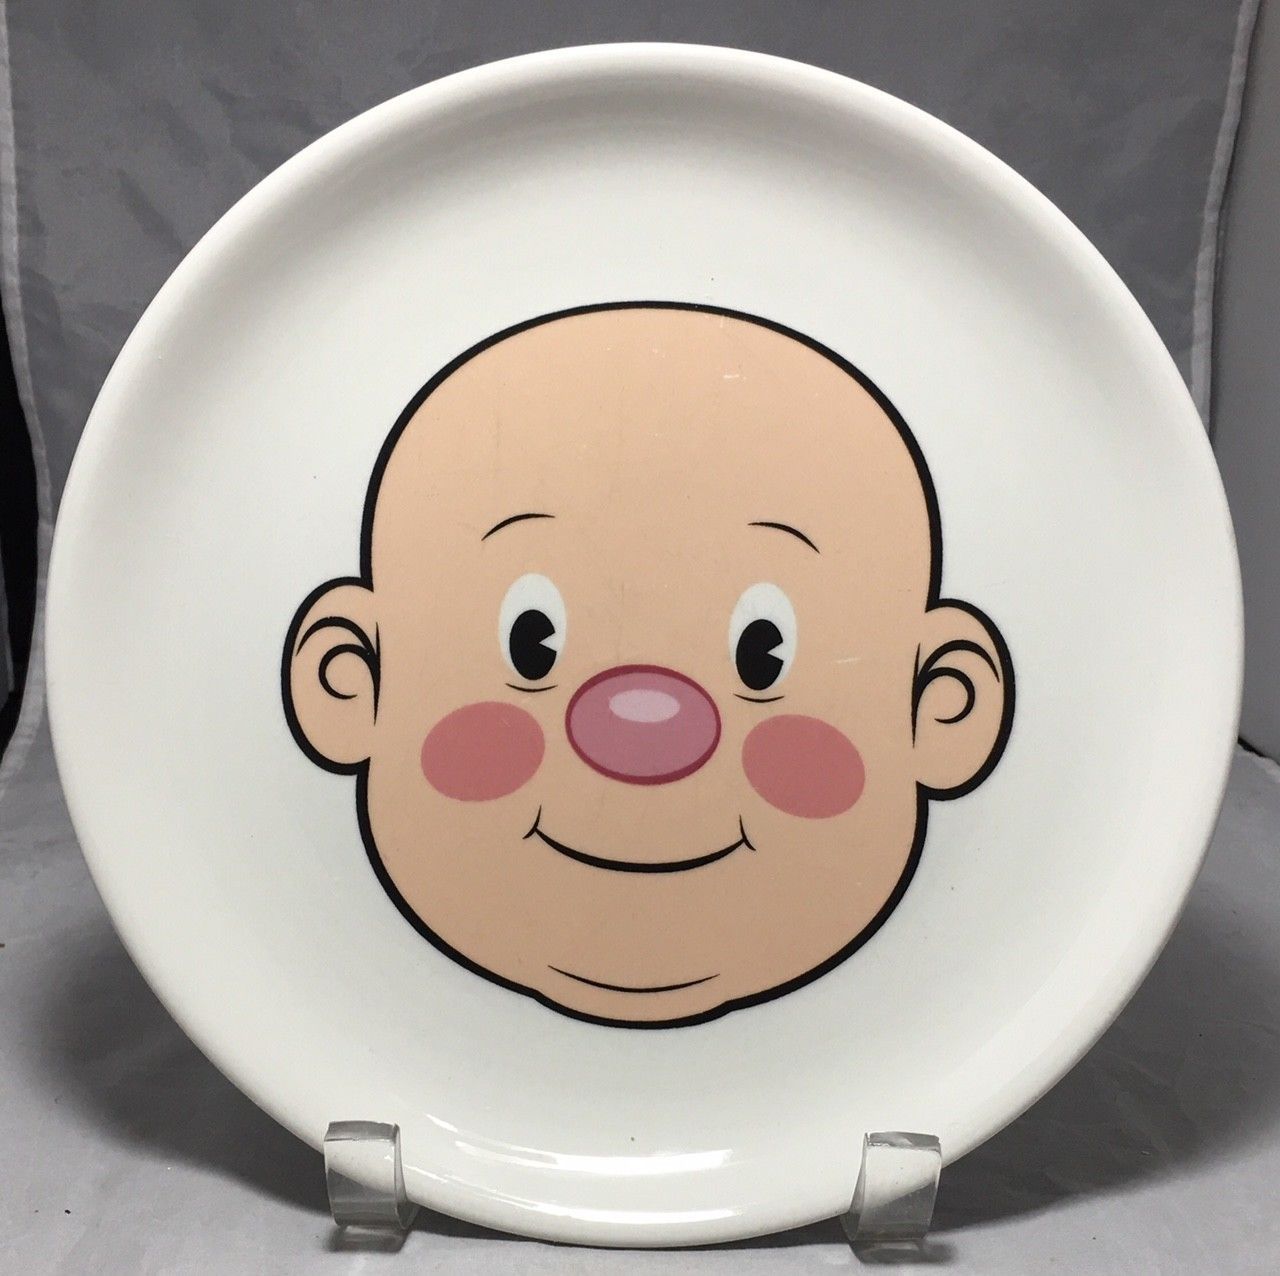 Fred MR. FOOD FACE Kids'  8-1/2" Ceramic  Dinner / Decorative whimsical plate - $5.40